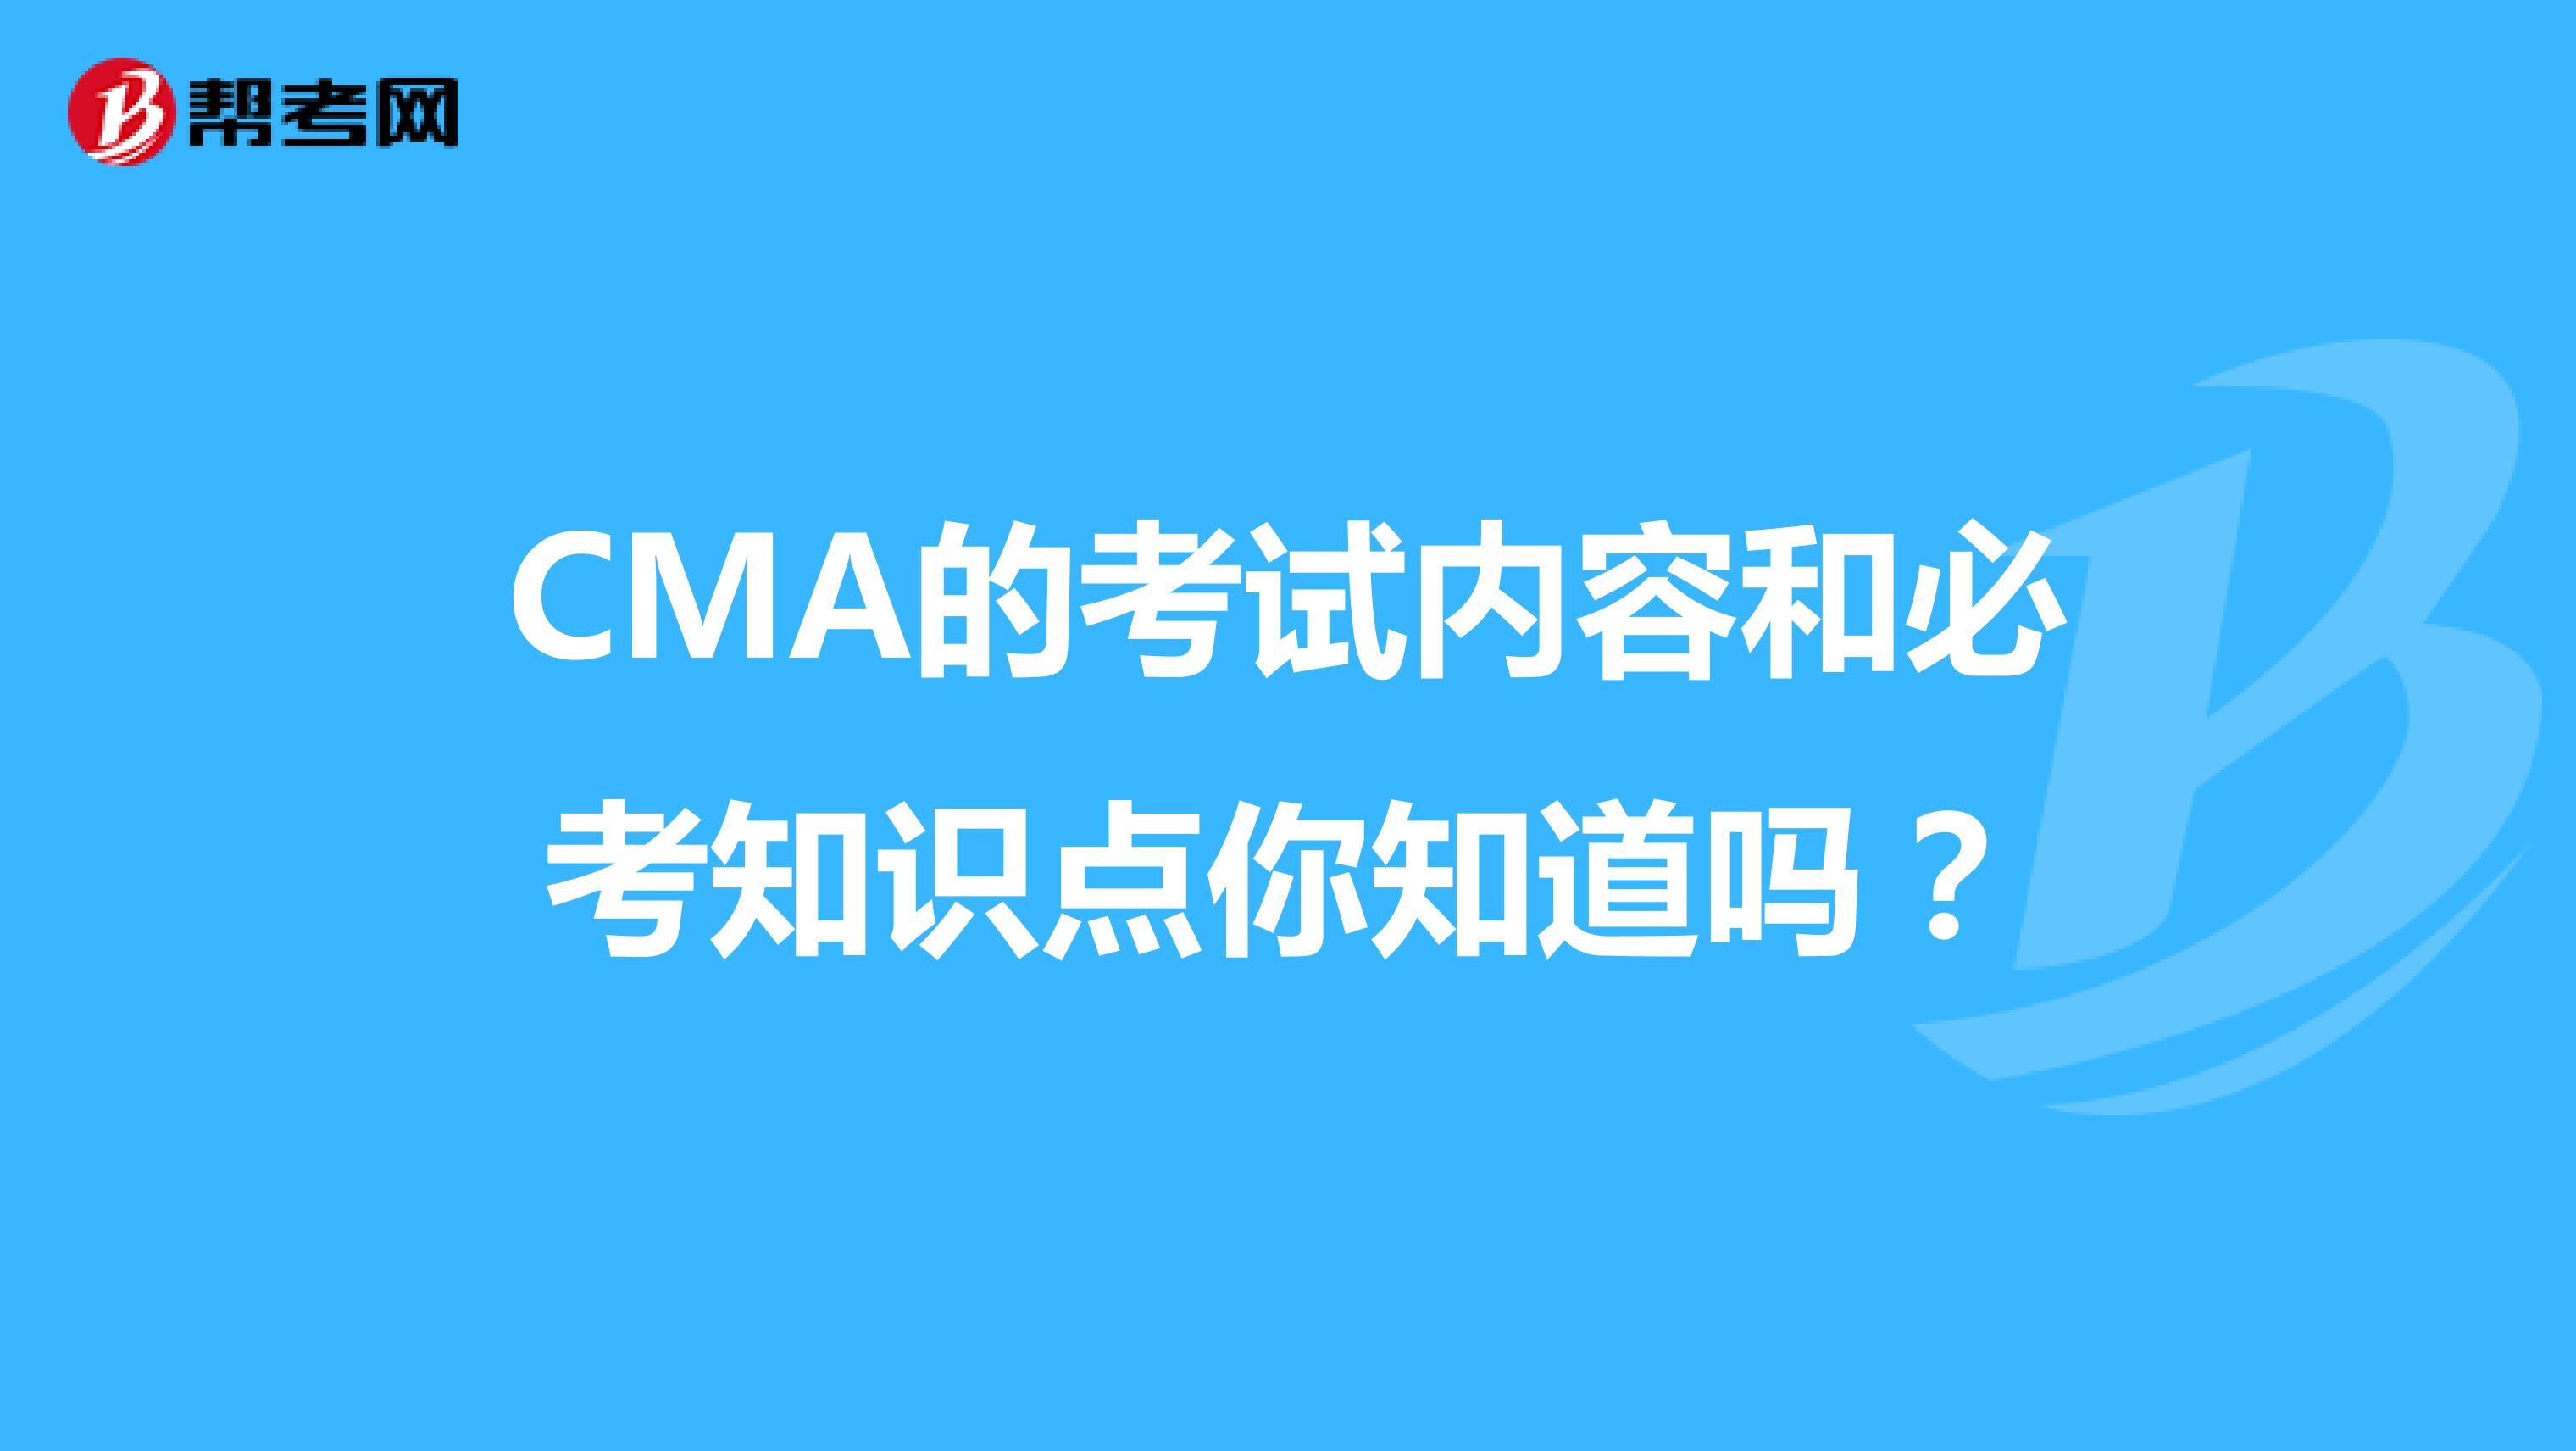 CMA的考试内容和必考知识点你知道吗？